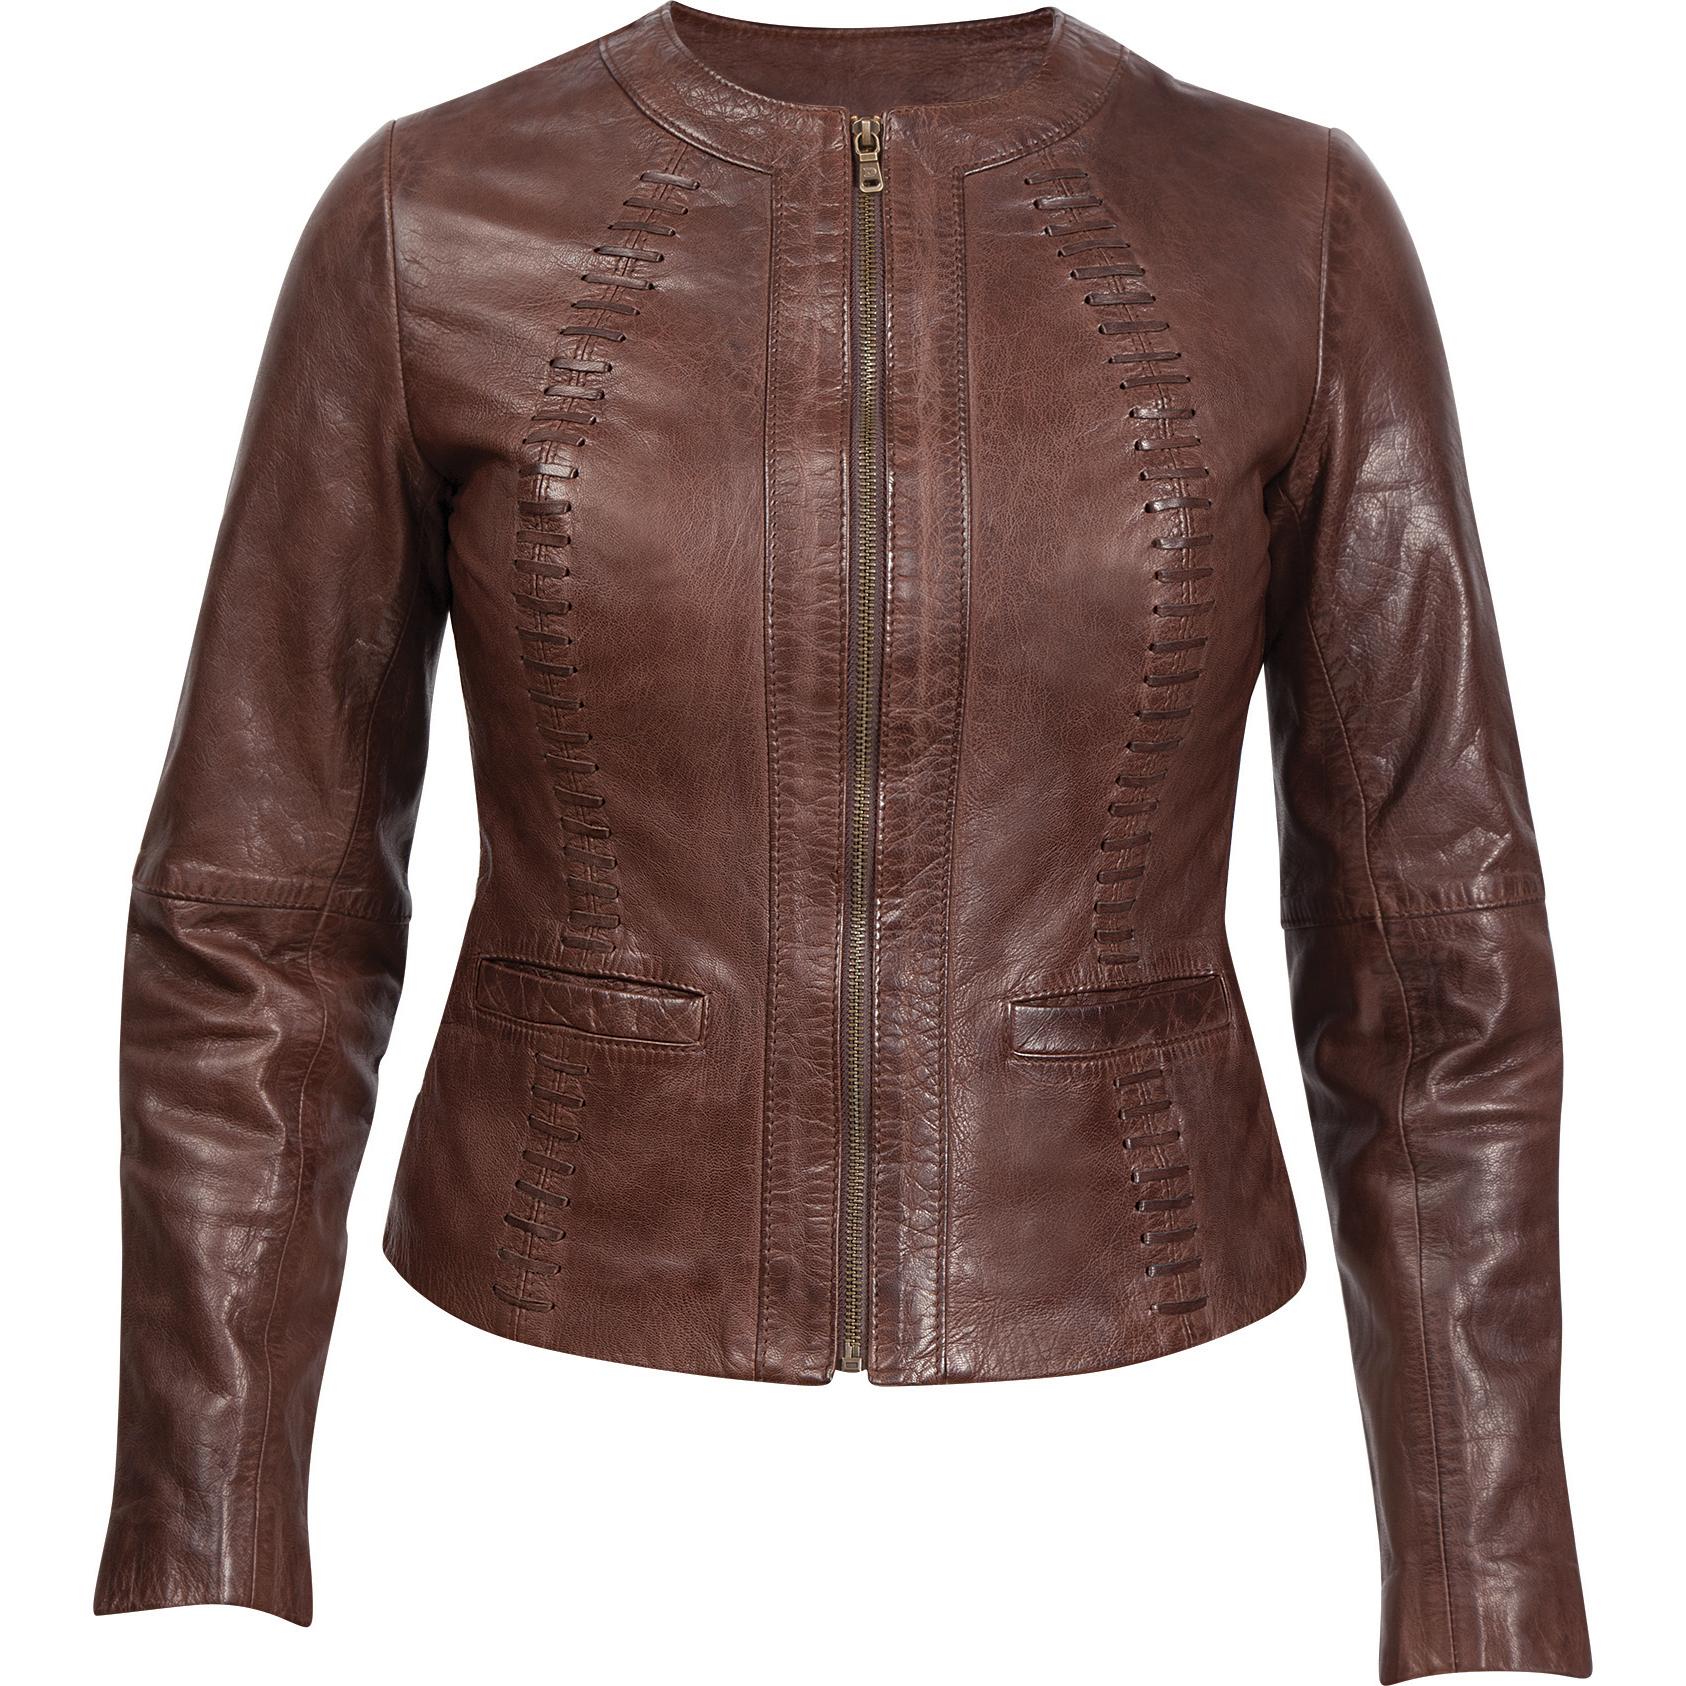 Durango Leather Company - Women's Wild Cat Brown Jacket